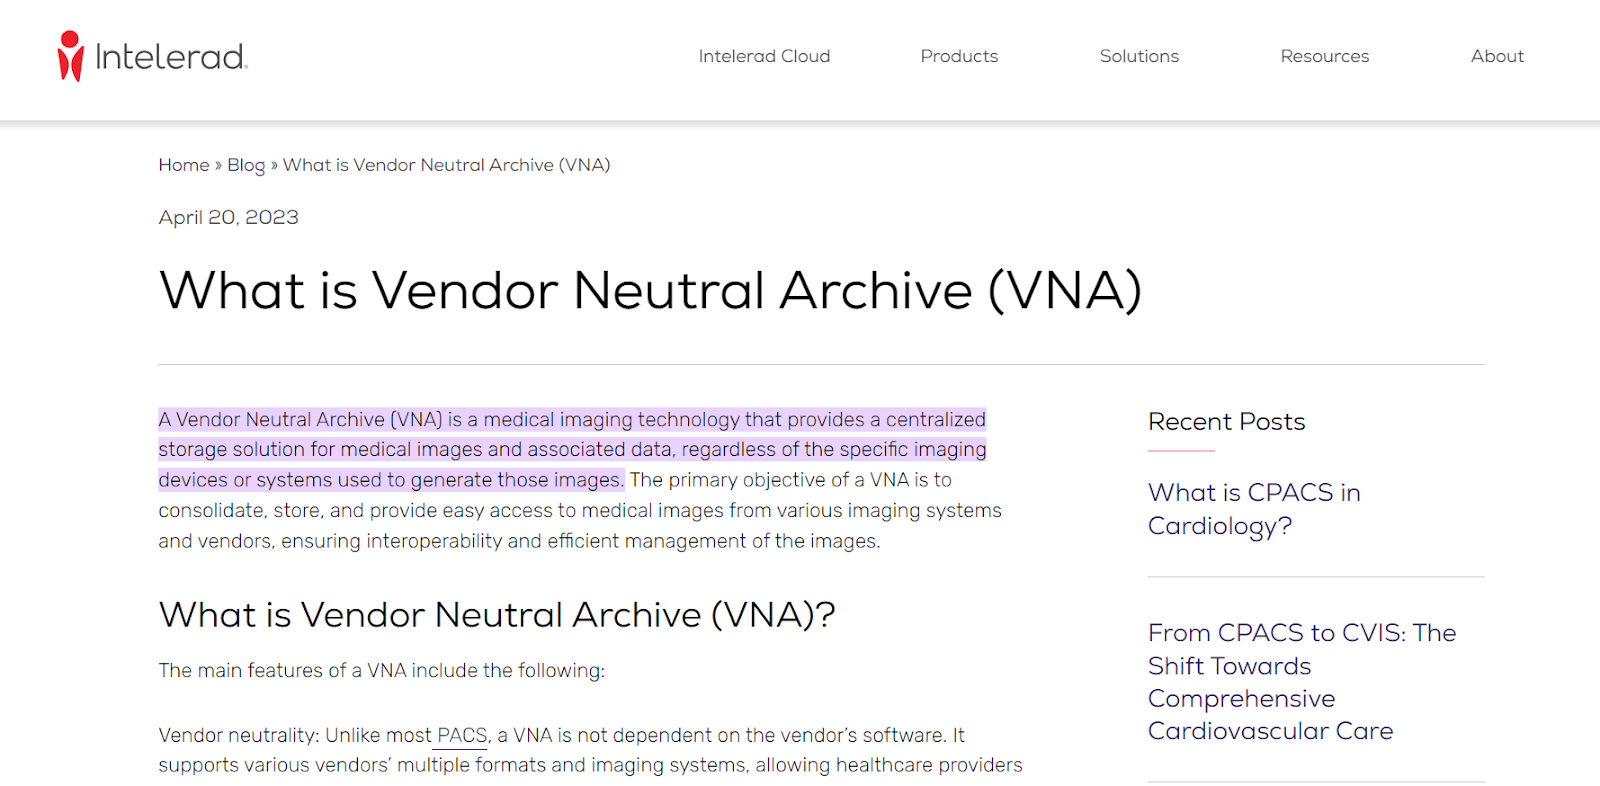 Trusted Vendor-Neutral Archive (VNA): 
